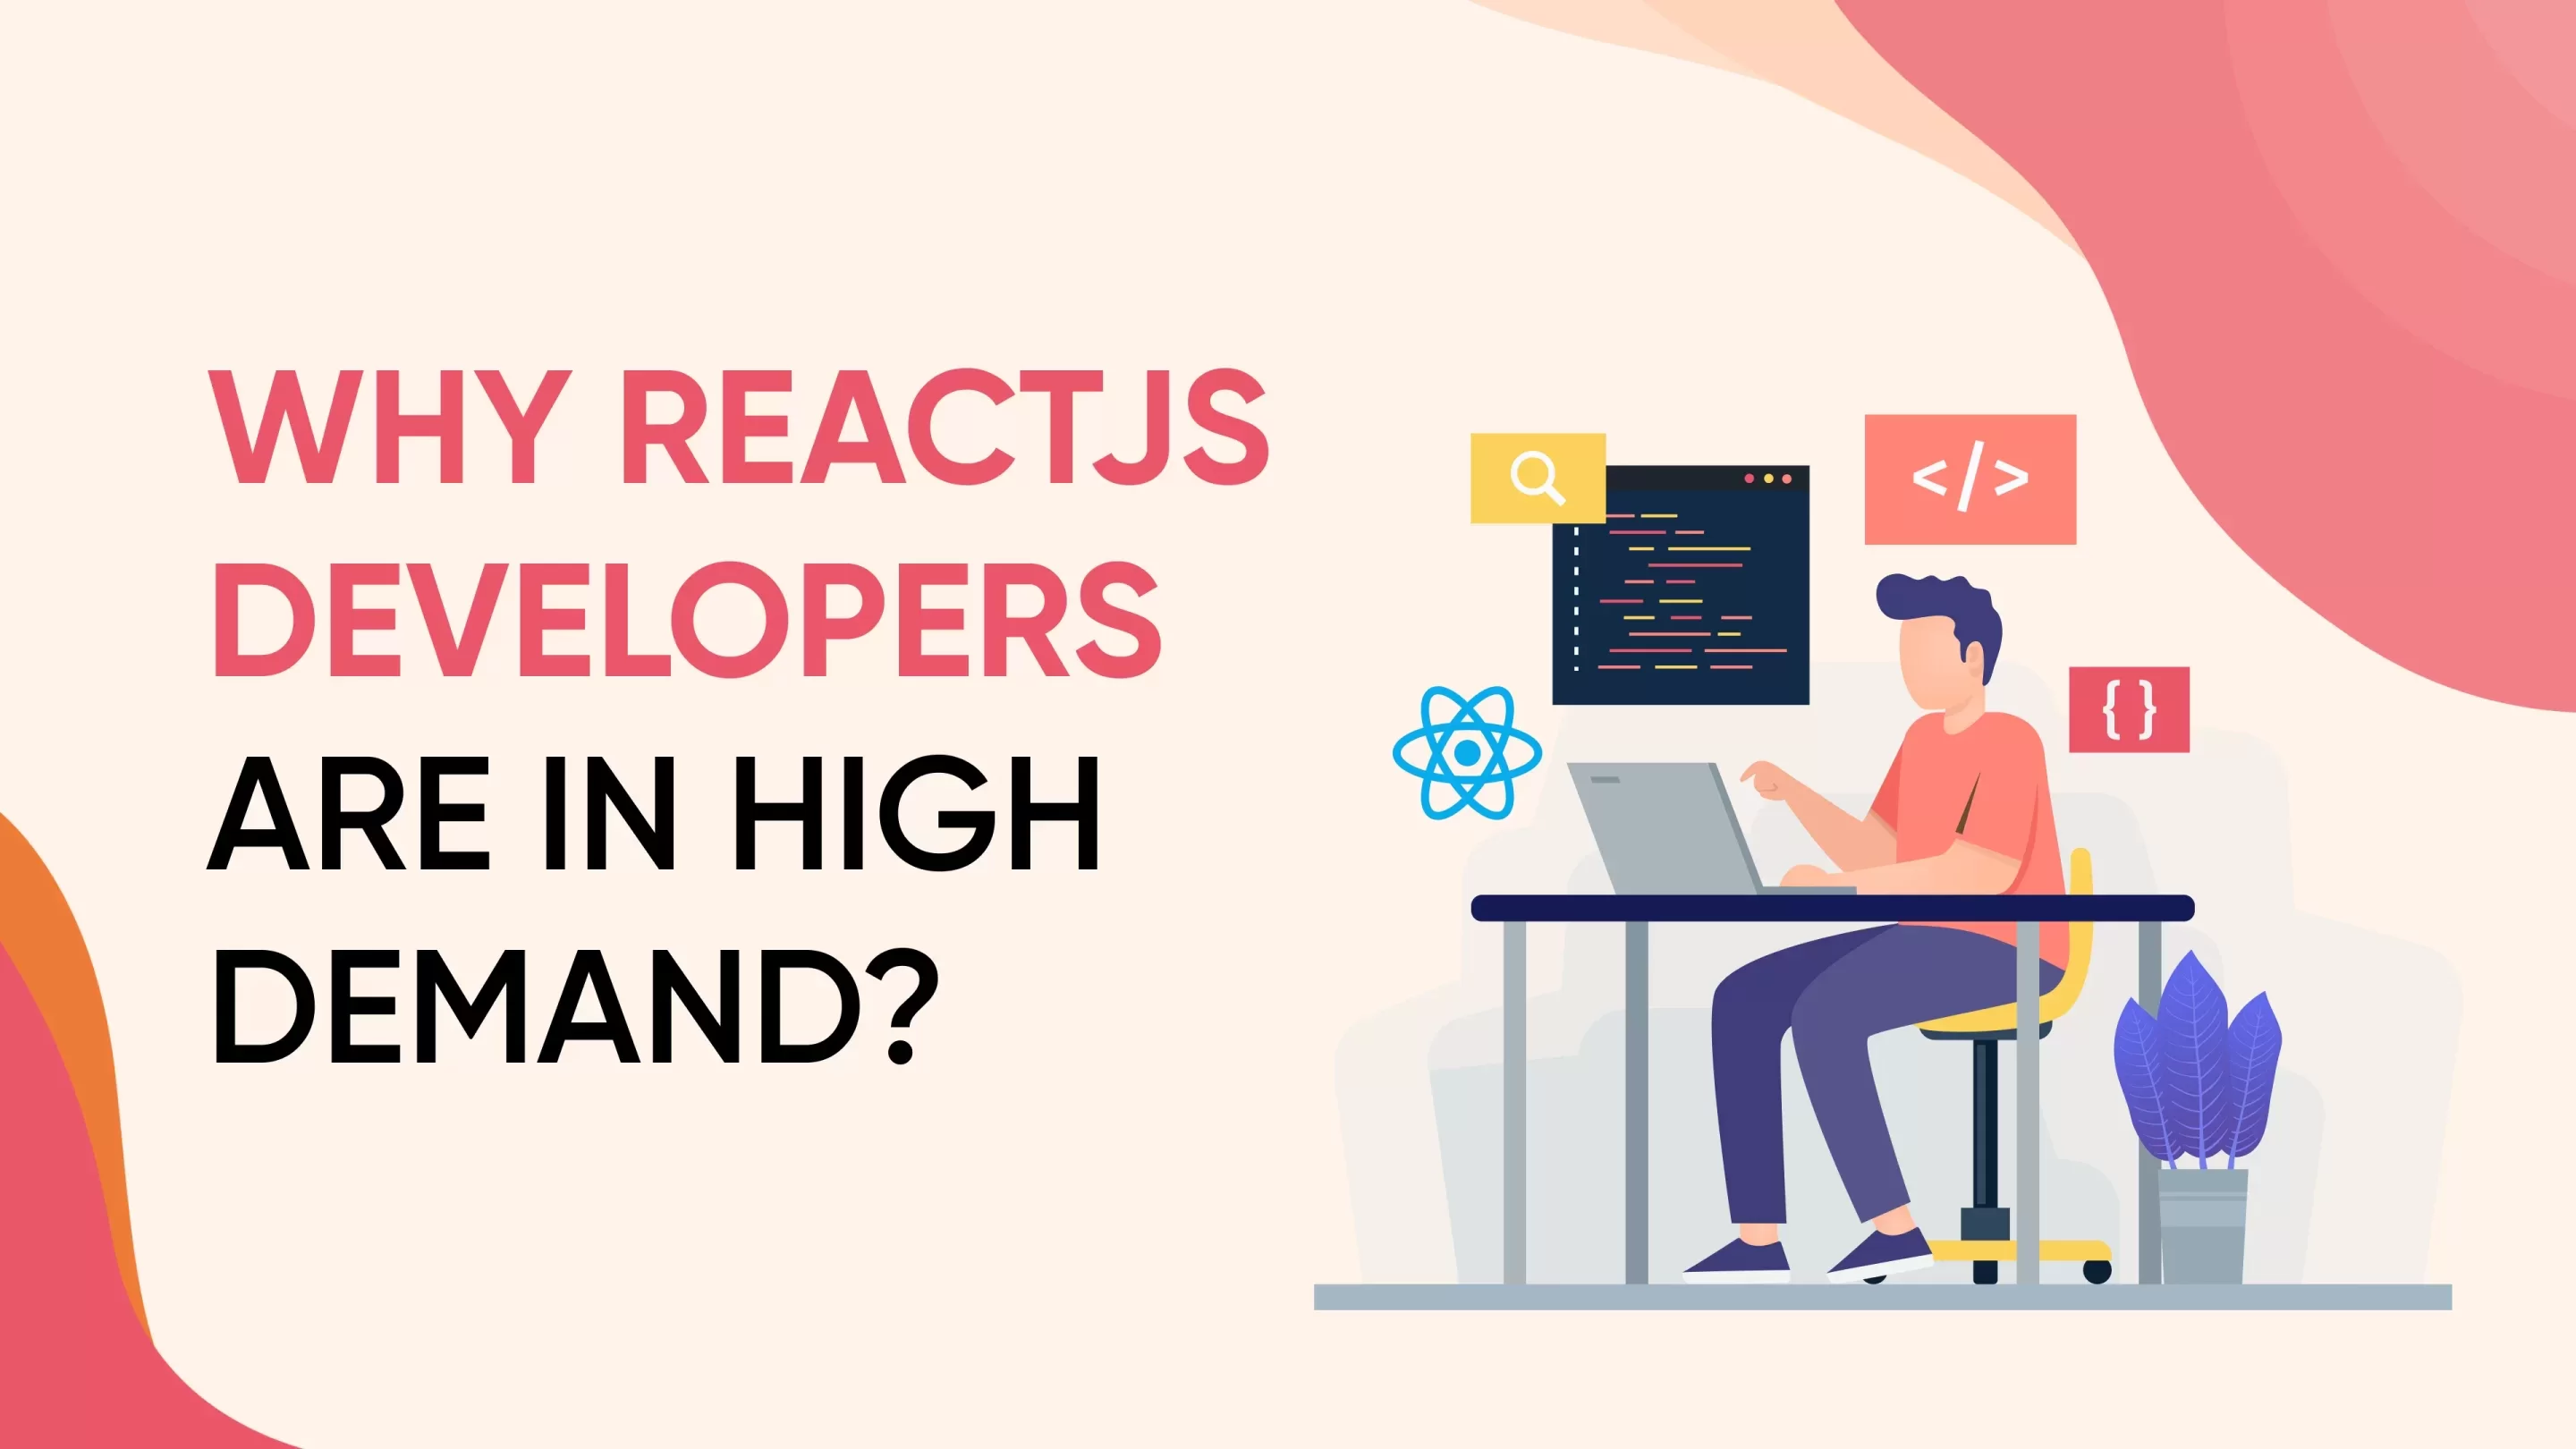 reactjs developers